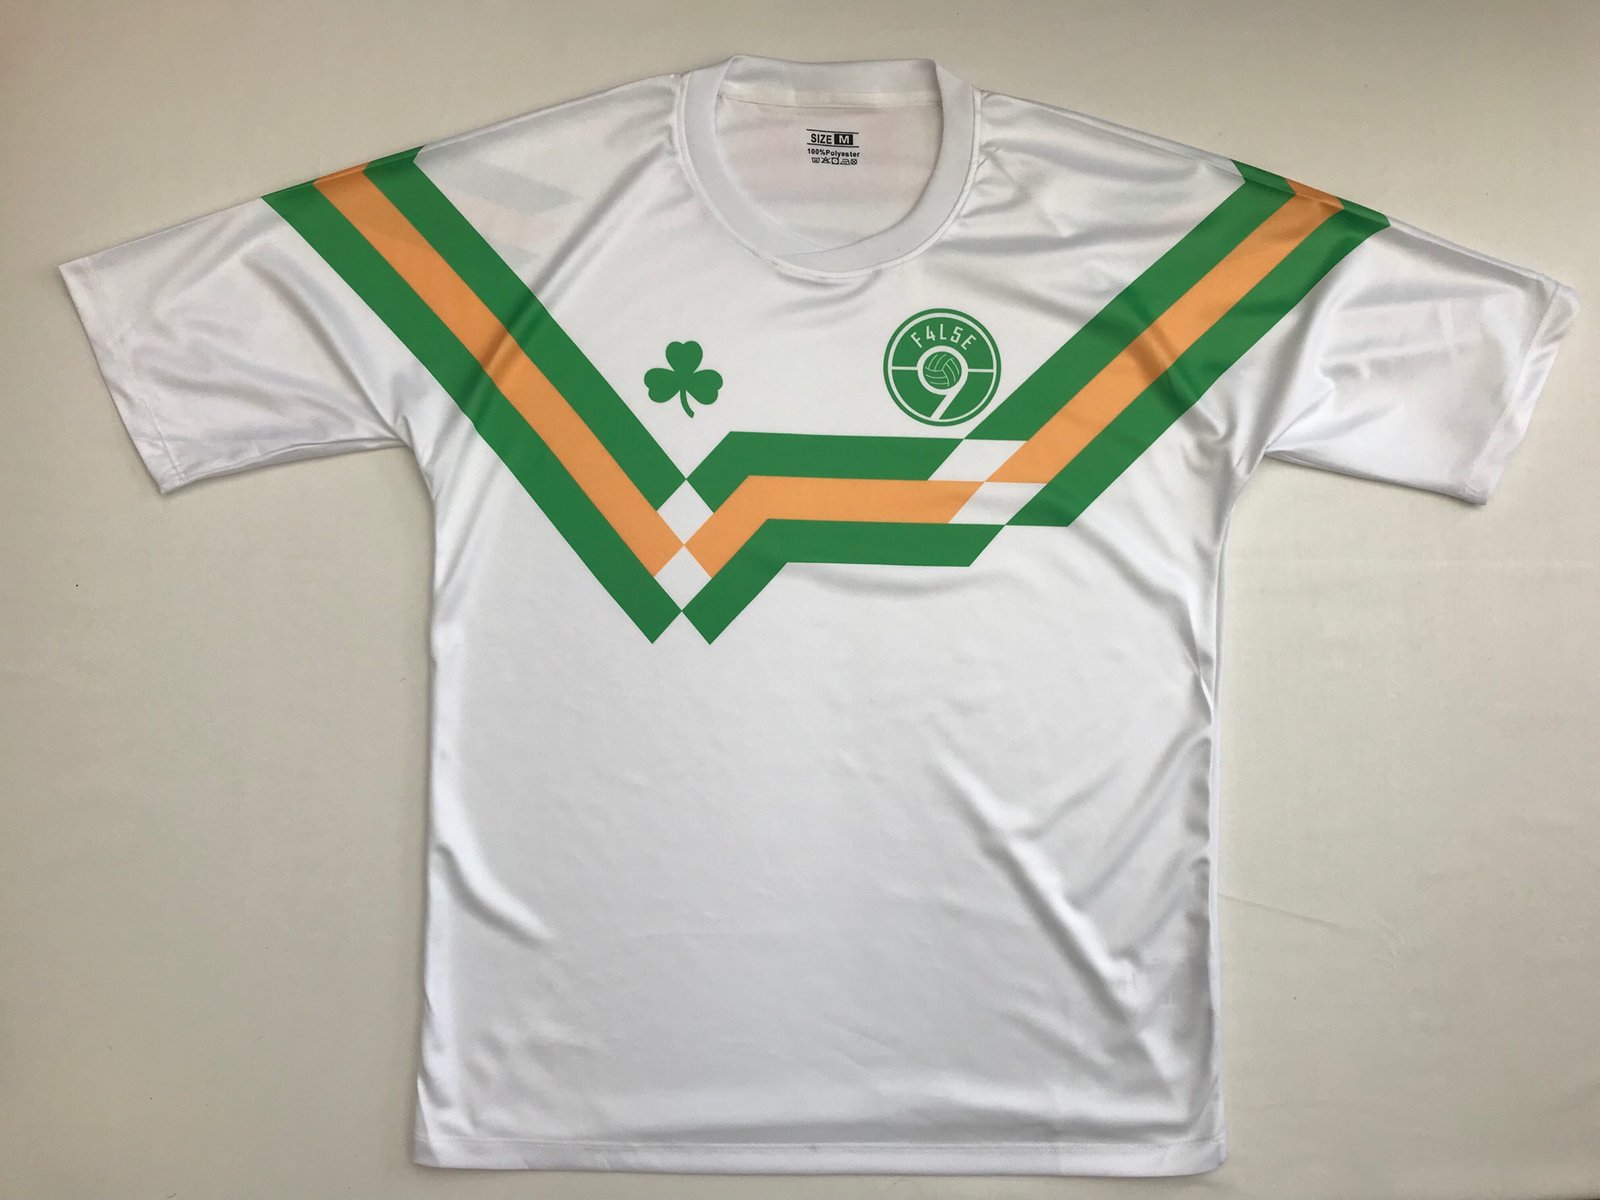 ireland soccer jersey sale